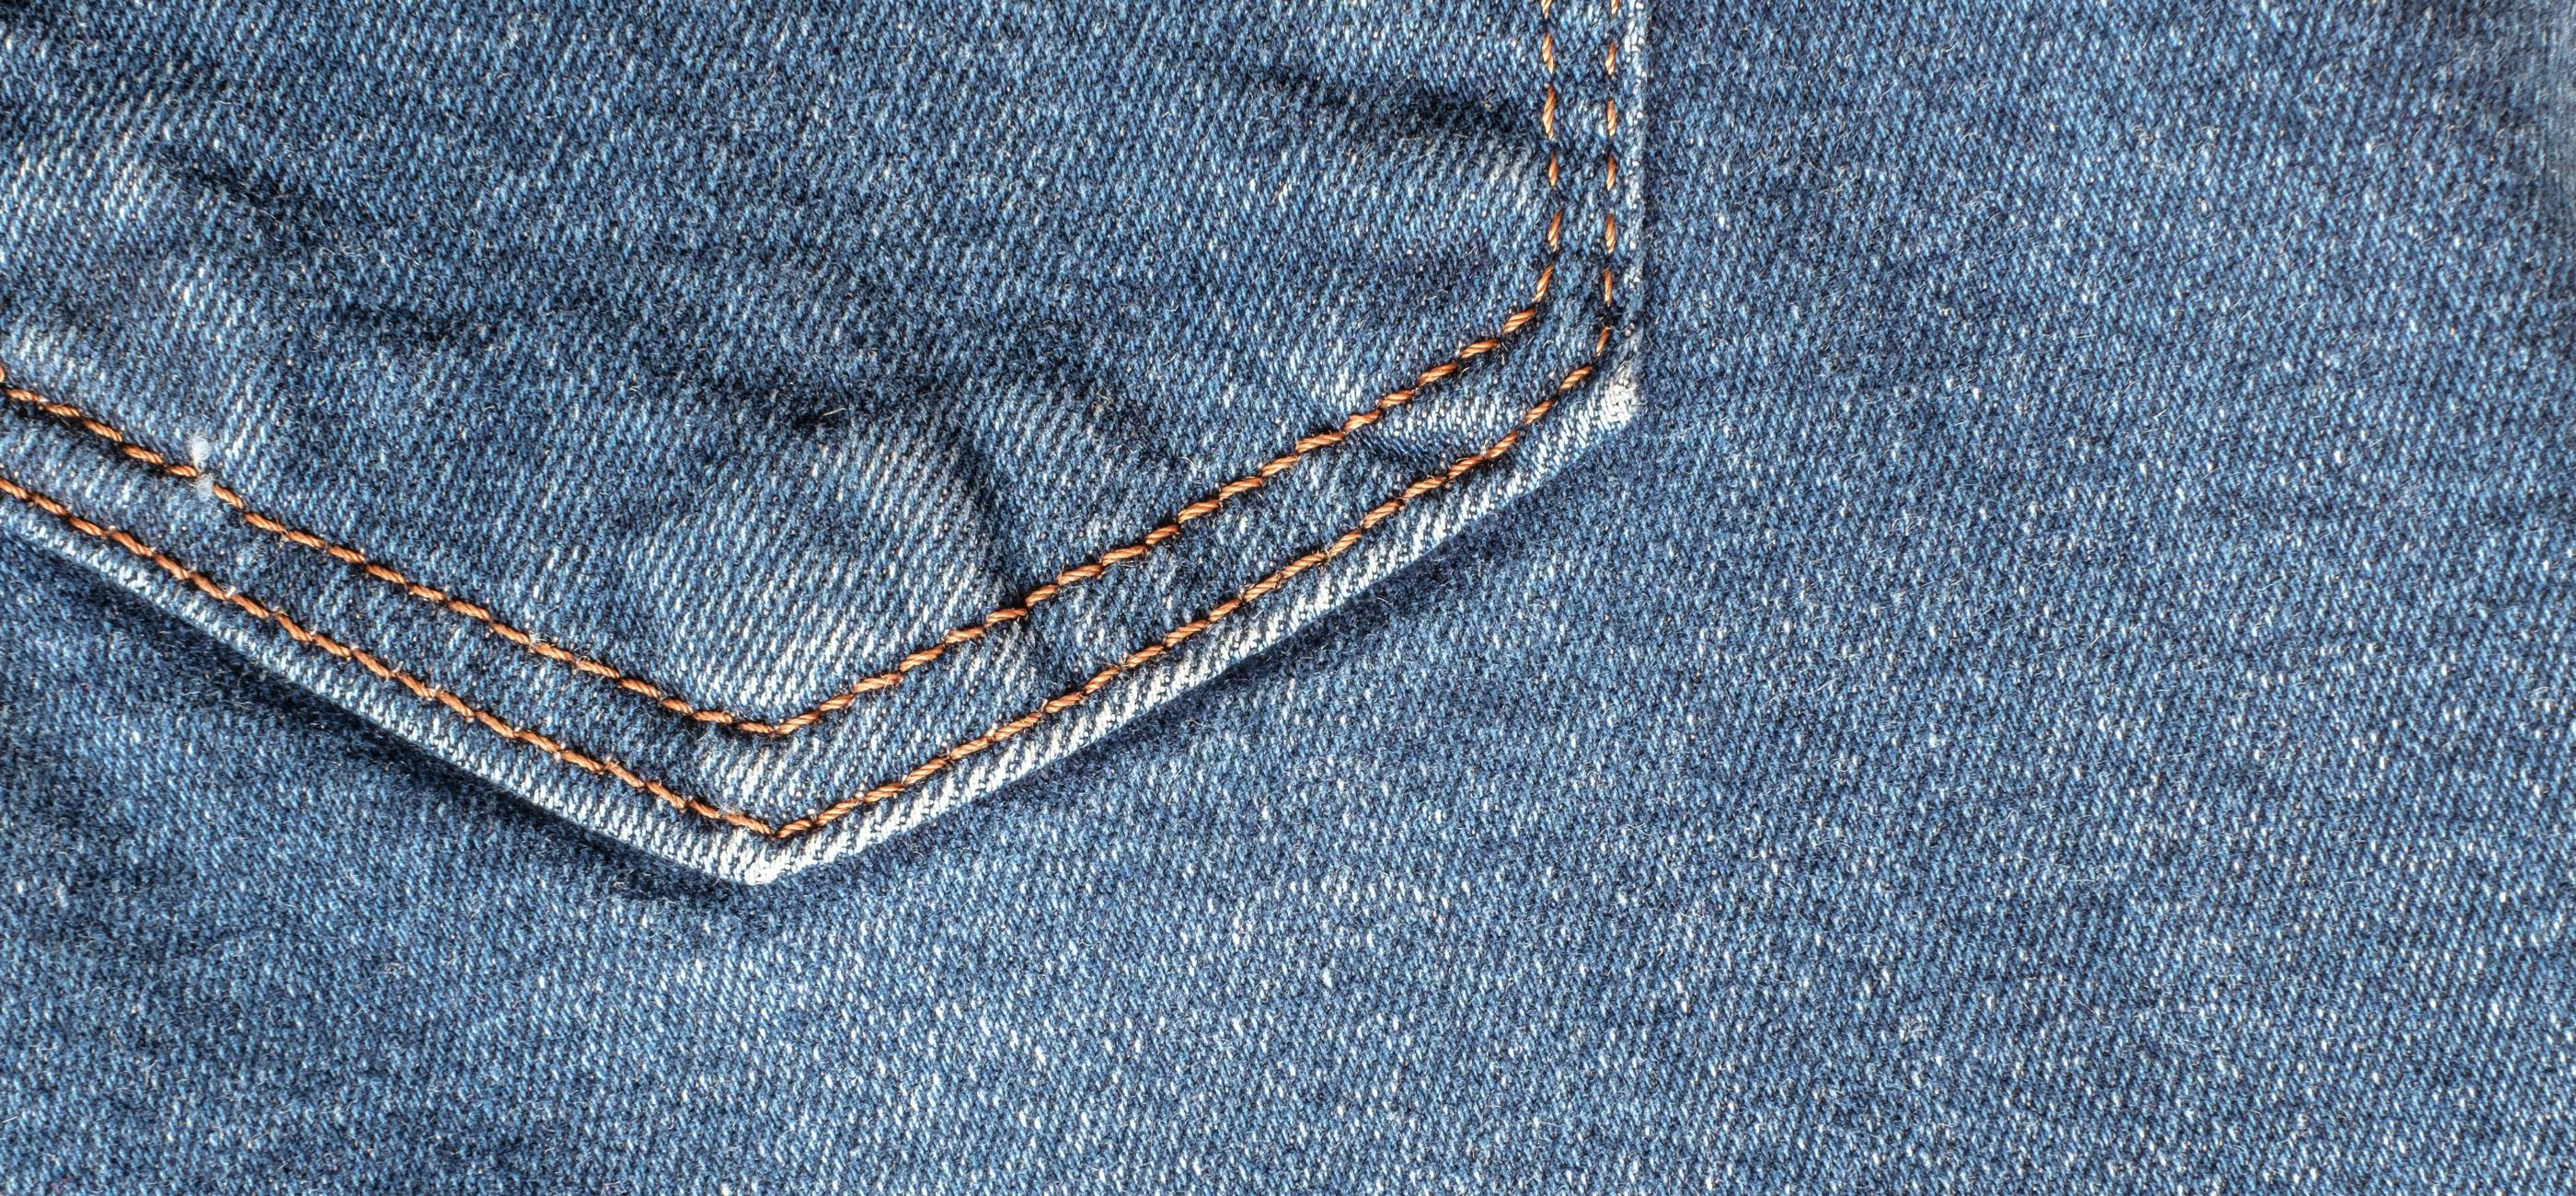 Close up of denim fabric